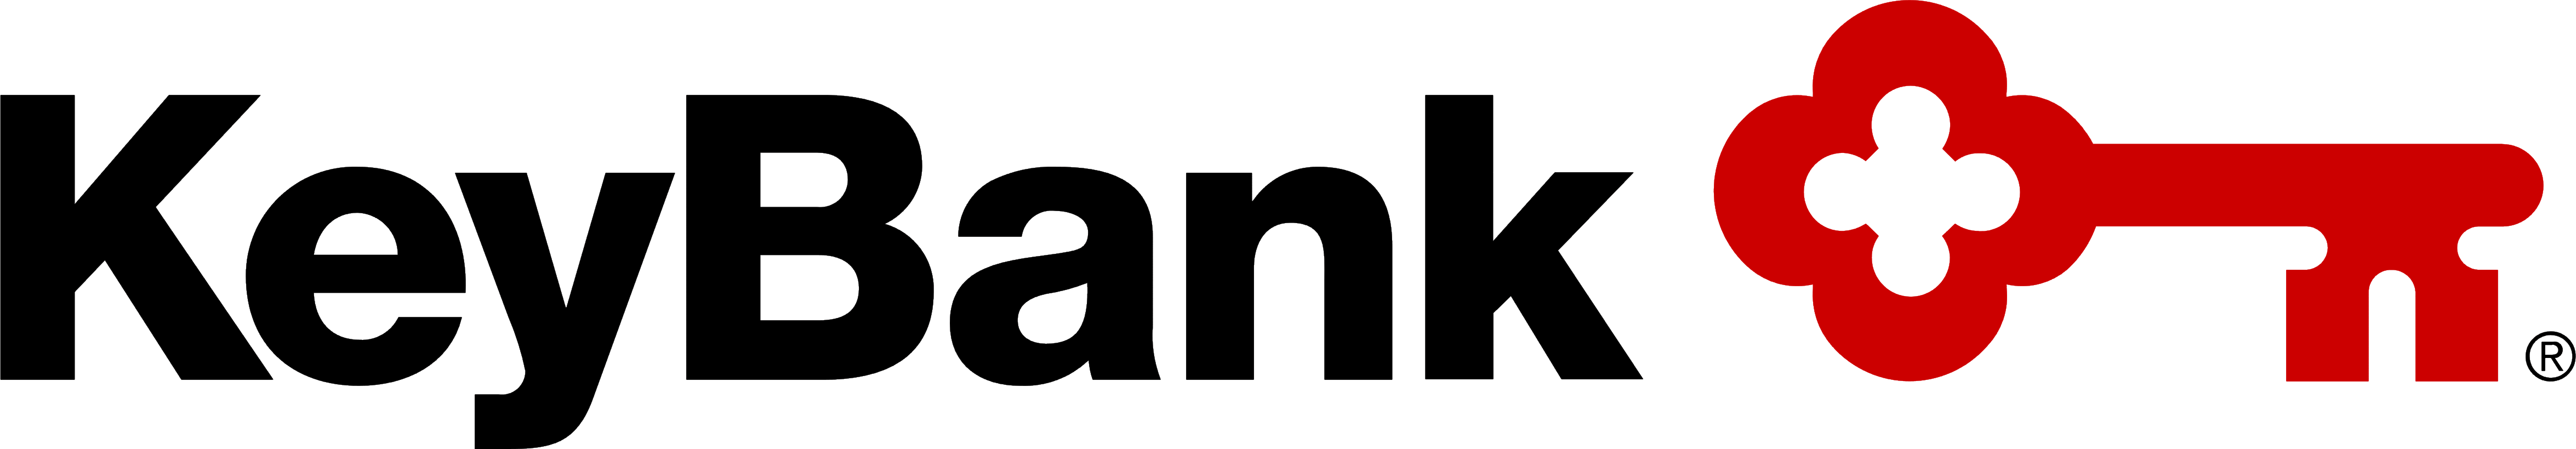 KeyBank sponsor logo